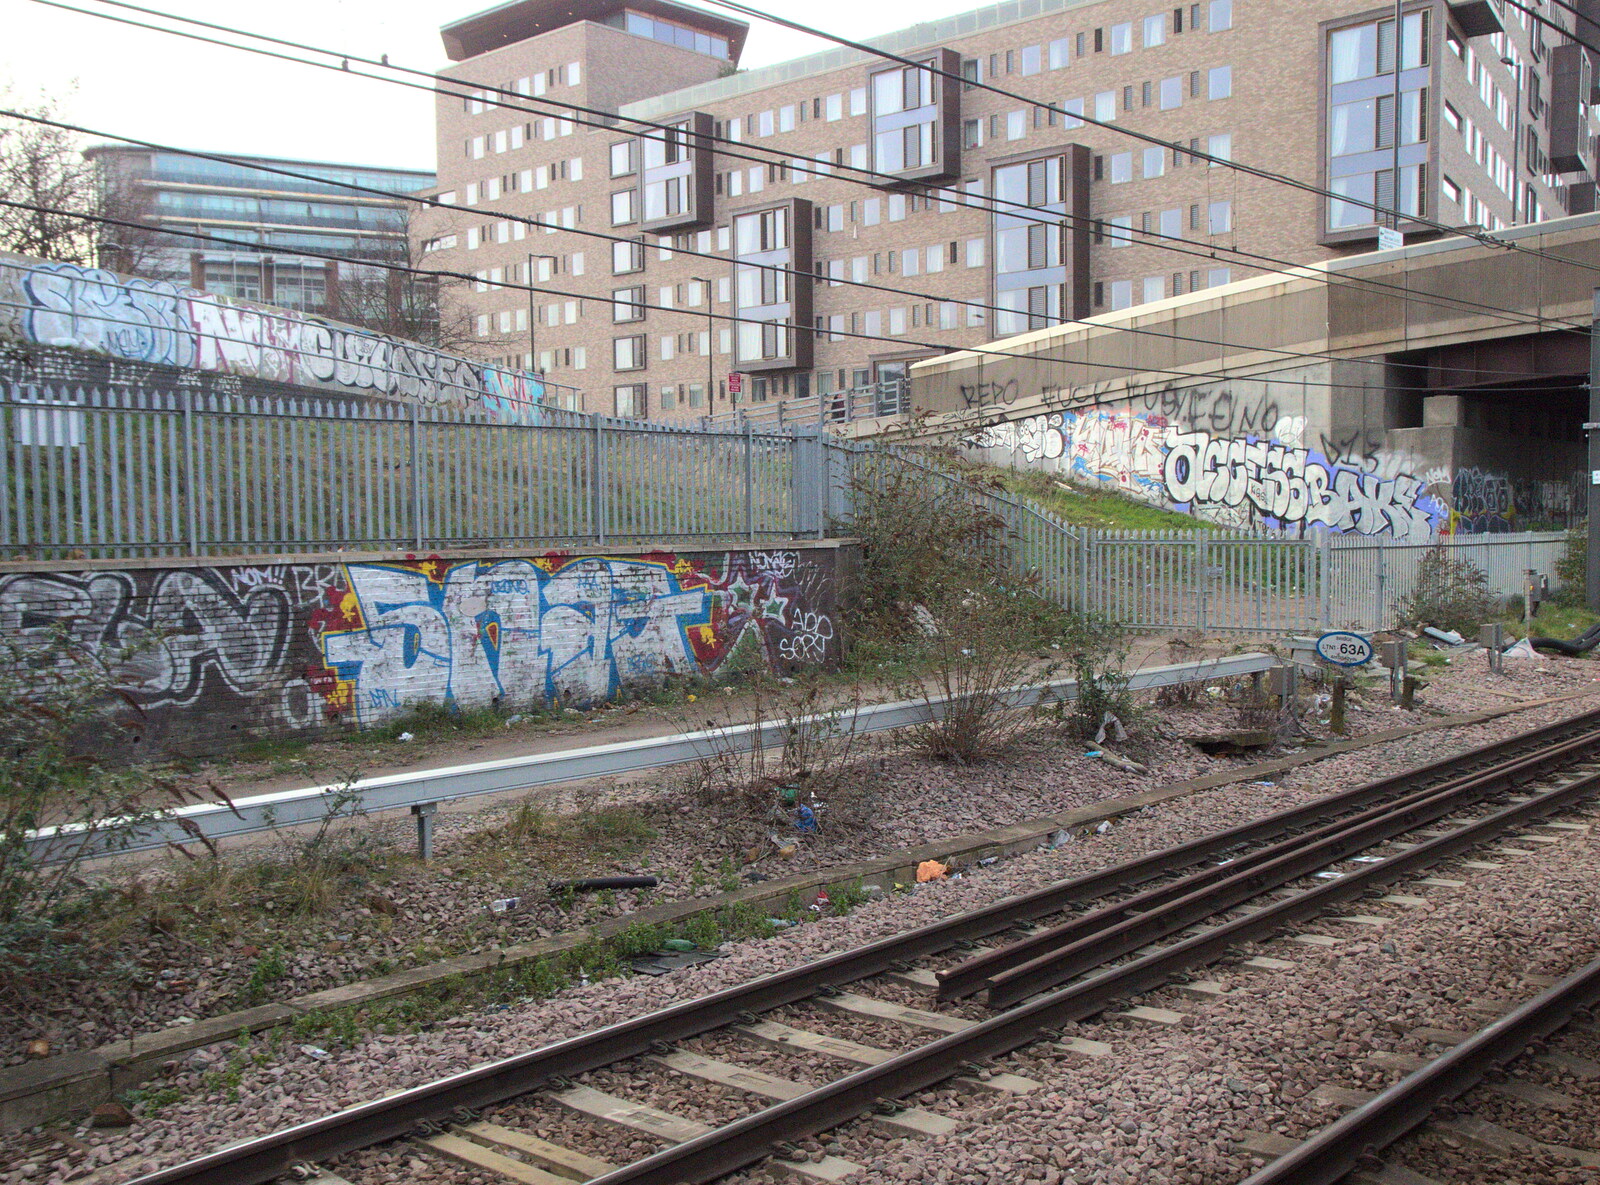 Loads of tags on a bridge near Stratford from Railway Graffiti, Tower Hamlets, London - 12th February 2019